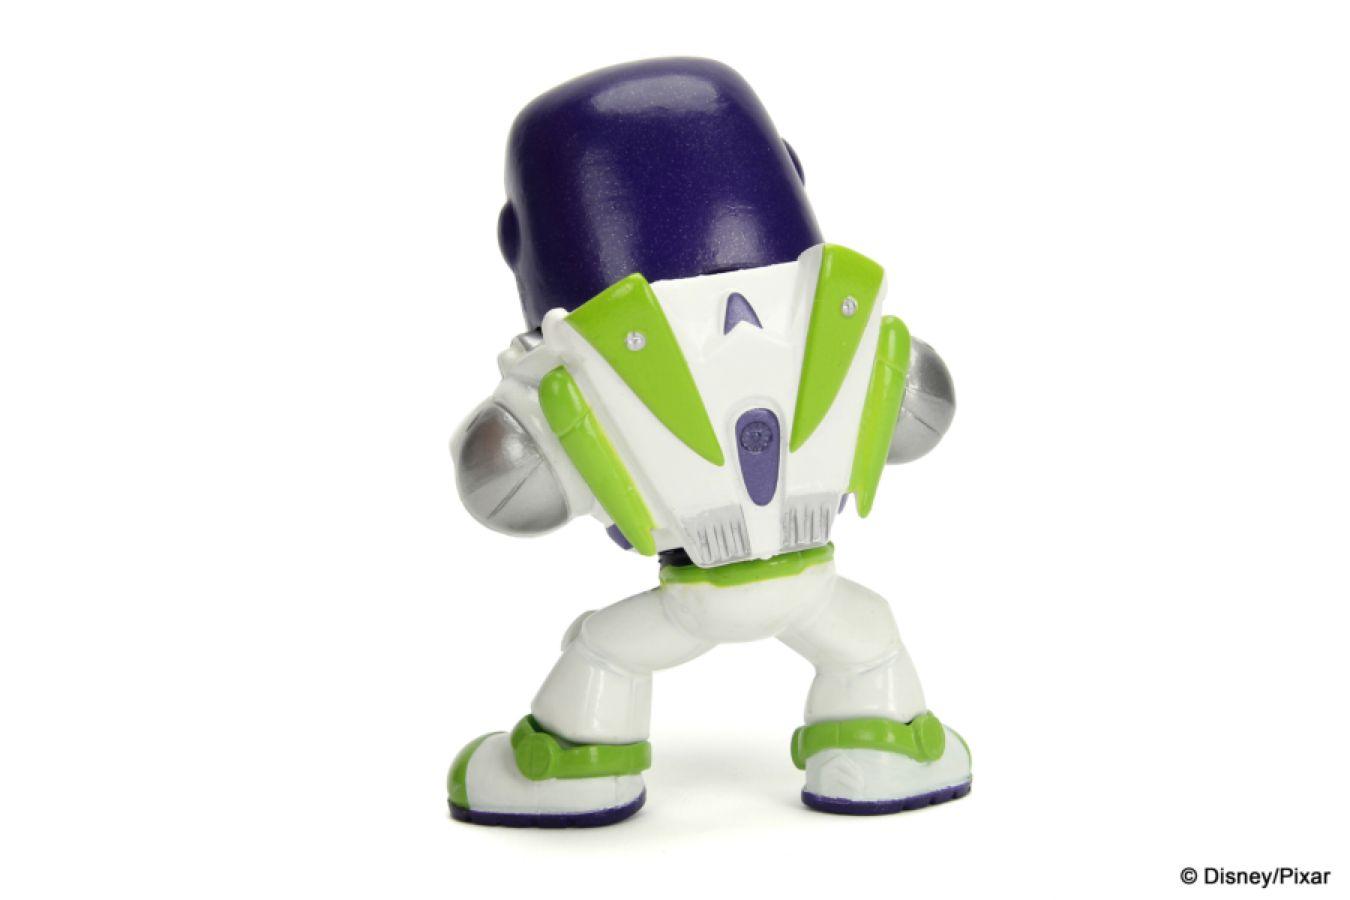 JAD98347 Toy Story - Buzz Lightyear 4" Diecast MetalFig - Jada Toys - Titan Pop Culture